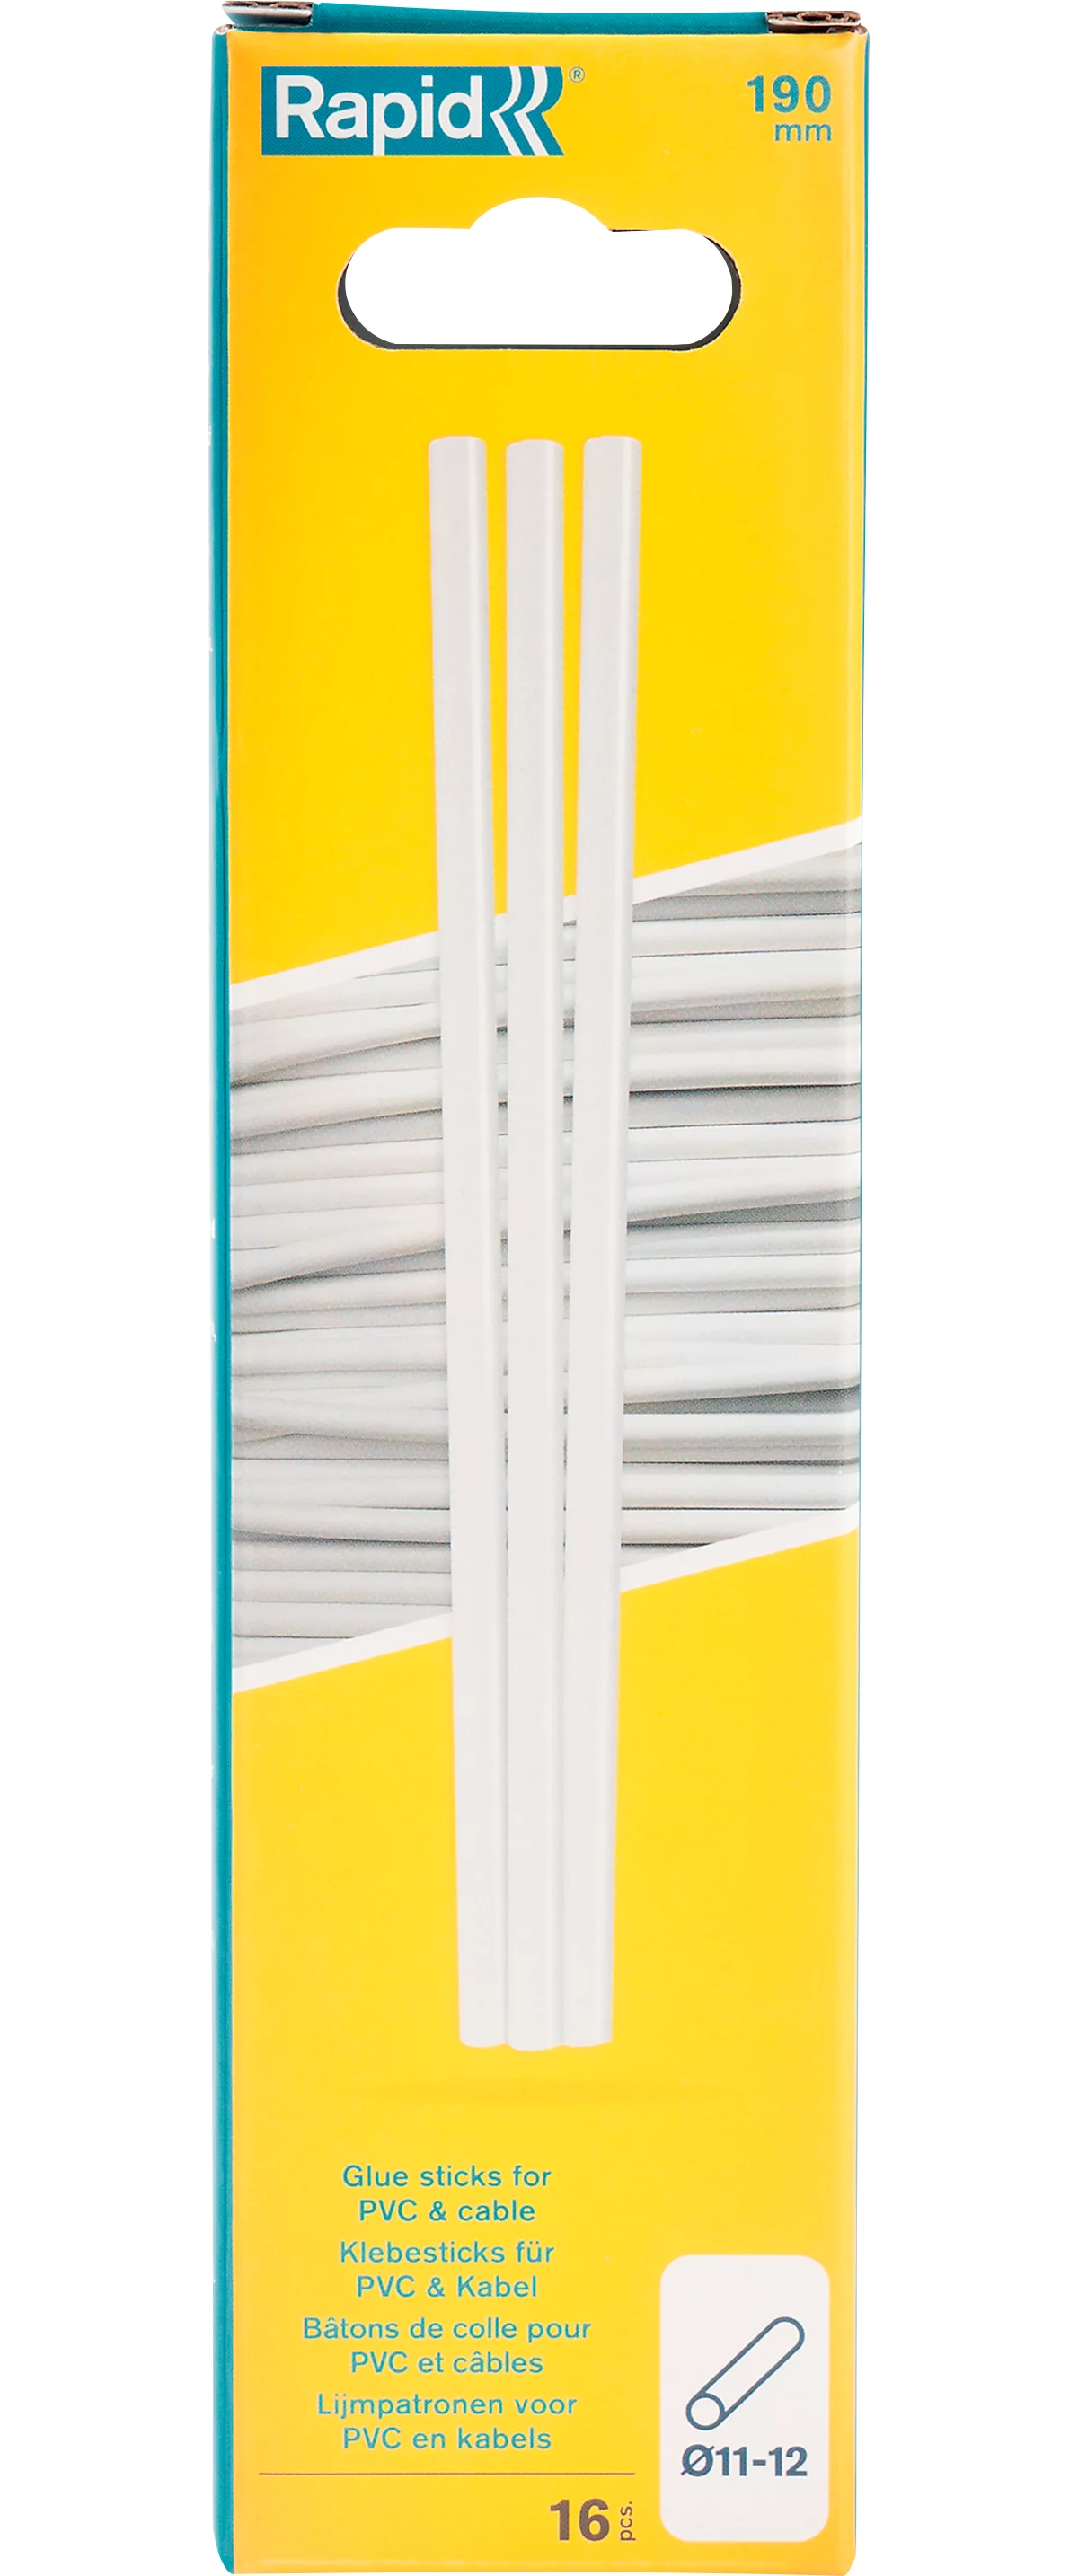 Rapid Klebesticks PVC & Kabel, Ø12 x 190 mm, transparent, lösemittelfrei, 16 Stück